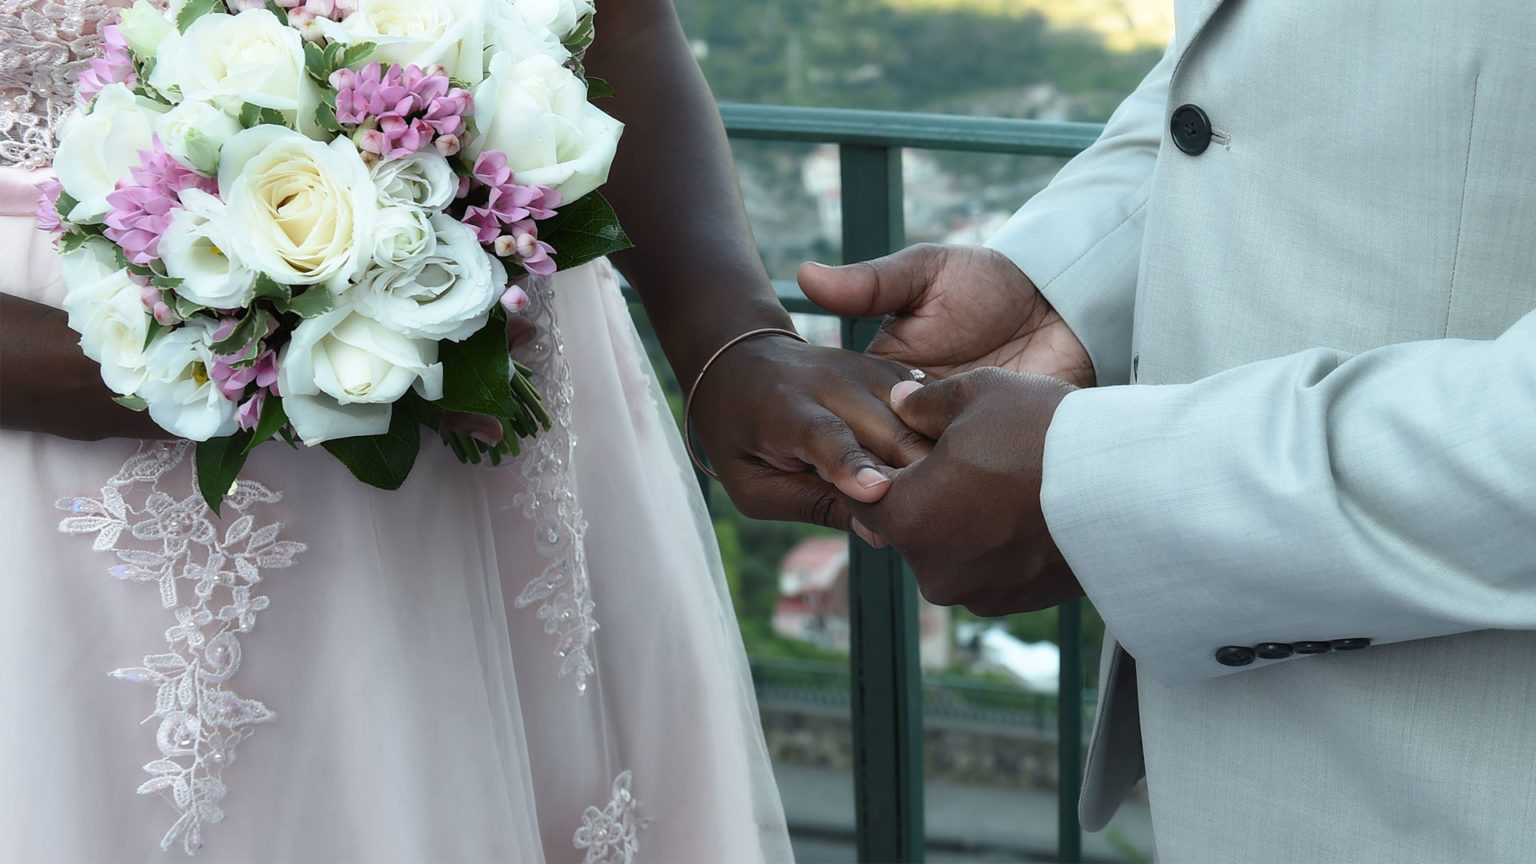 vows-renewal-happy-brides-wedding-planner-1536x864